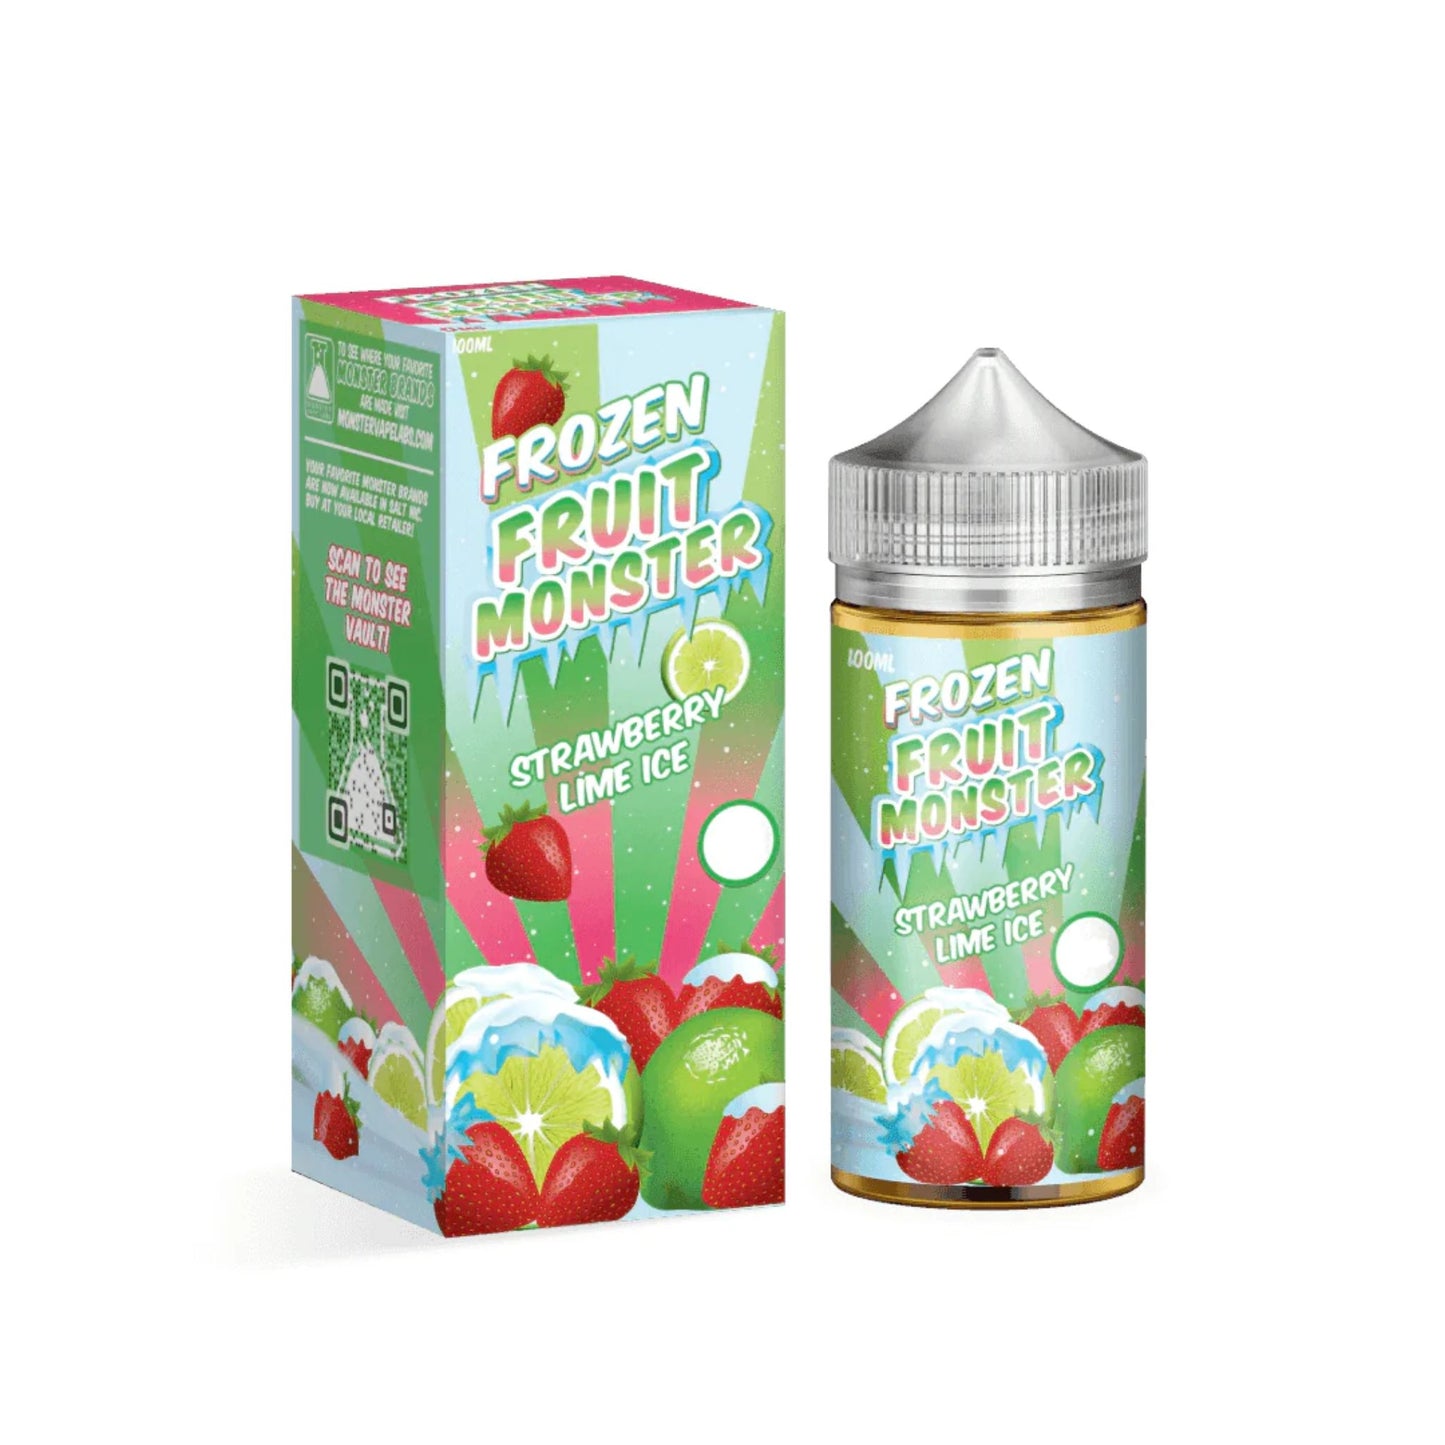 Frozen Fruit Monster | Strawberry Lime Ice 100ml bottle and box